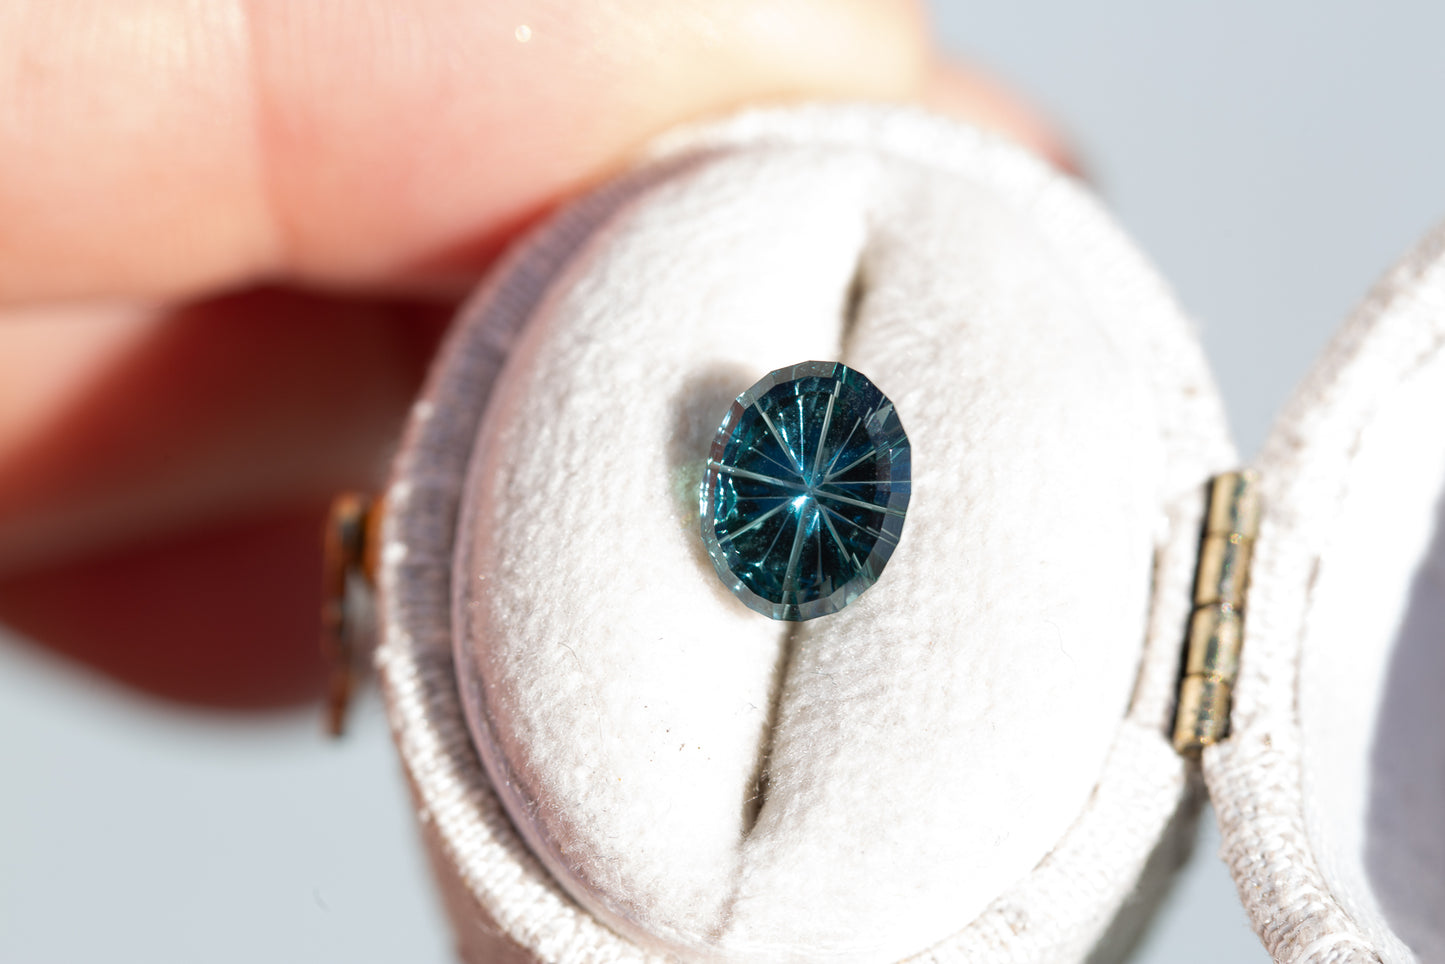 2.15ct oval deep teal sapphire - Starbrite cut by John Dyer